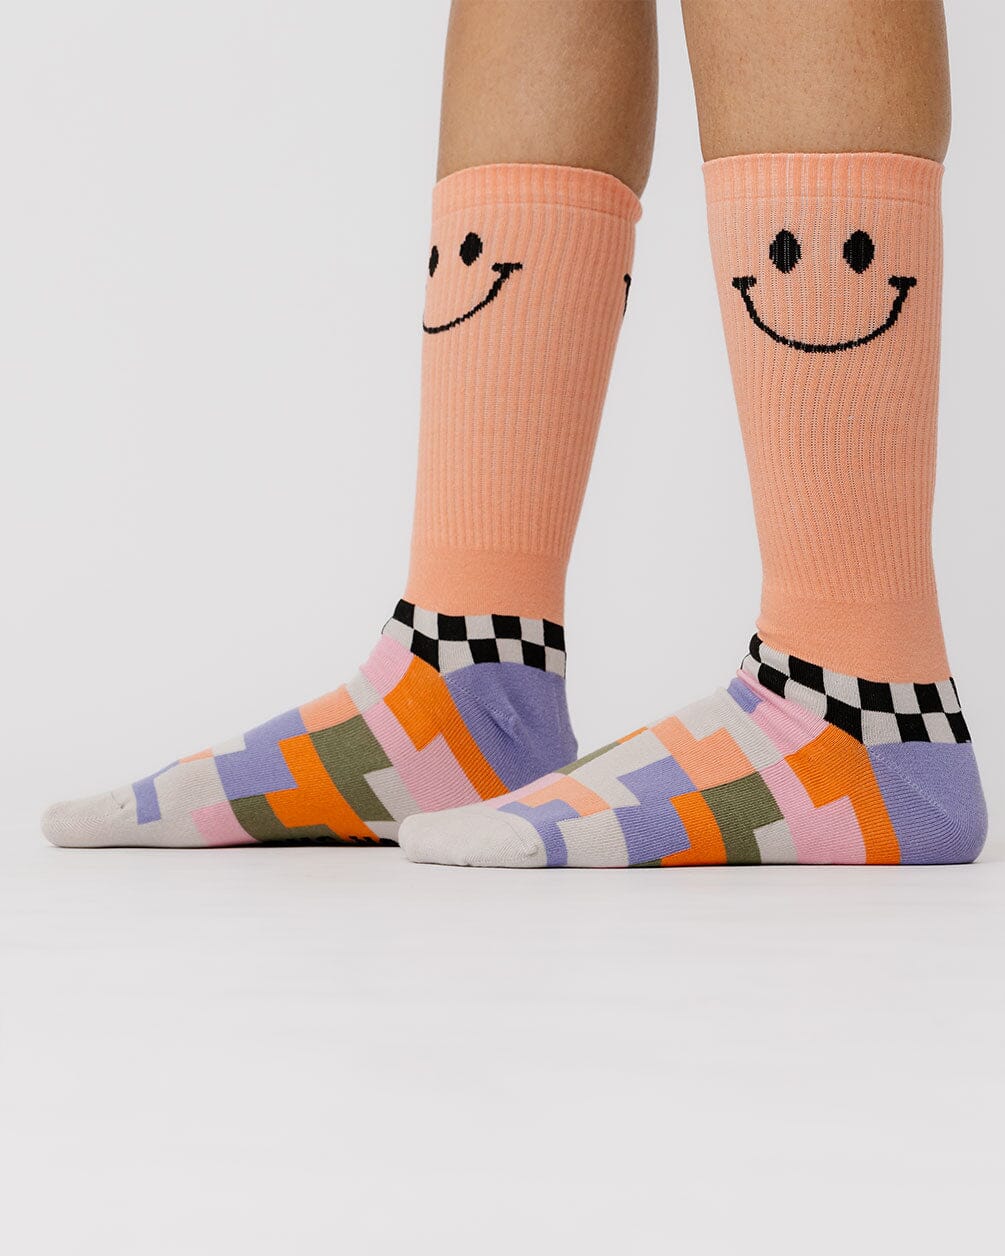 Smiley Pixels Neck Socks Neck Socks In Your Shoe 